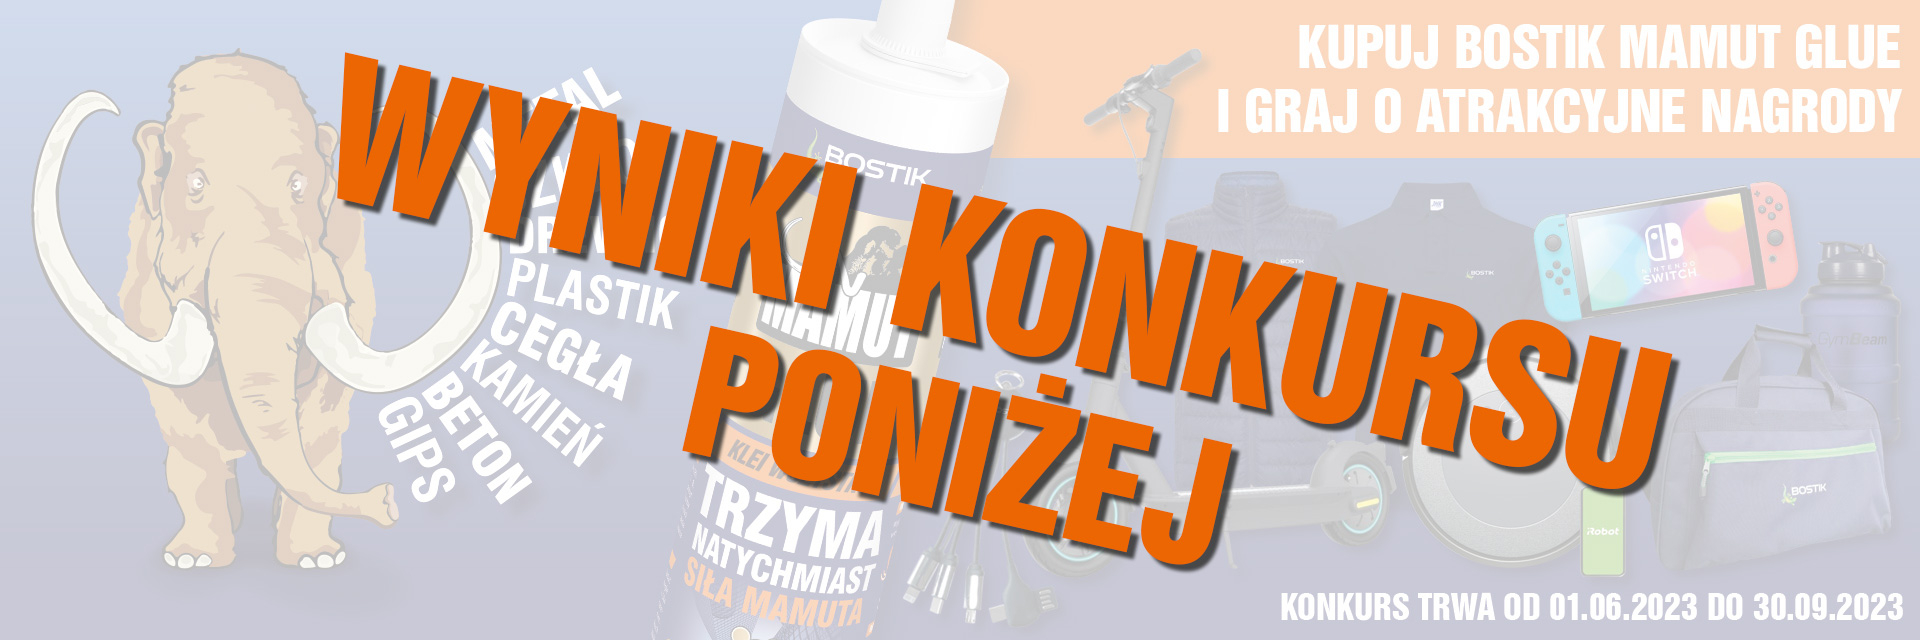 Bostik DIY Poland campaign Mamut glue banner image